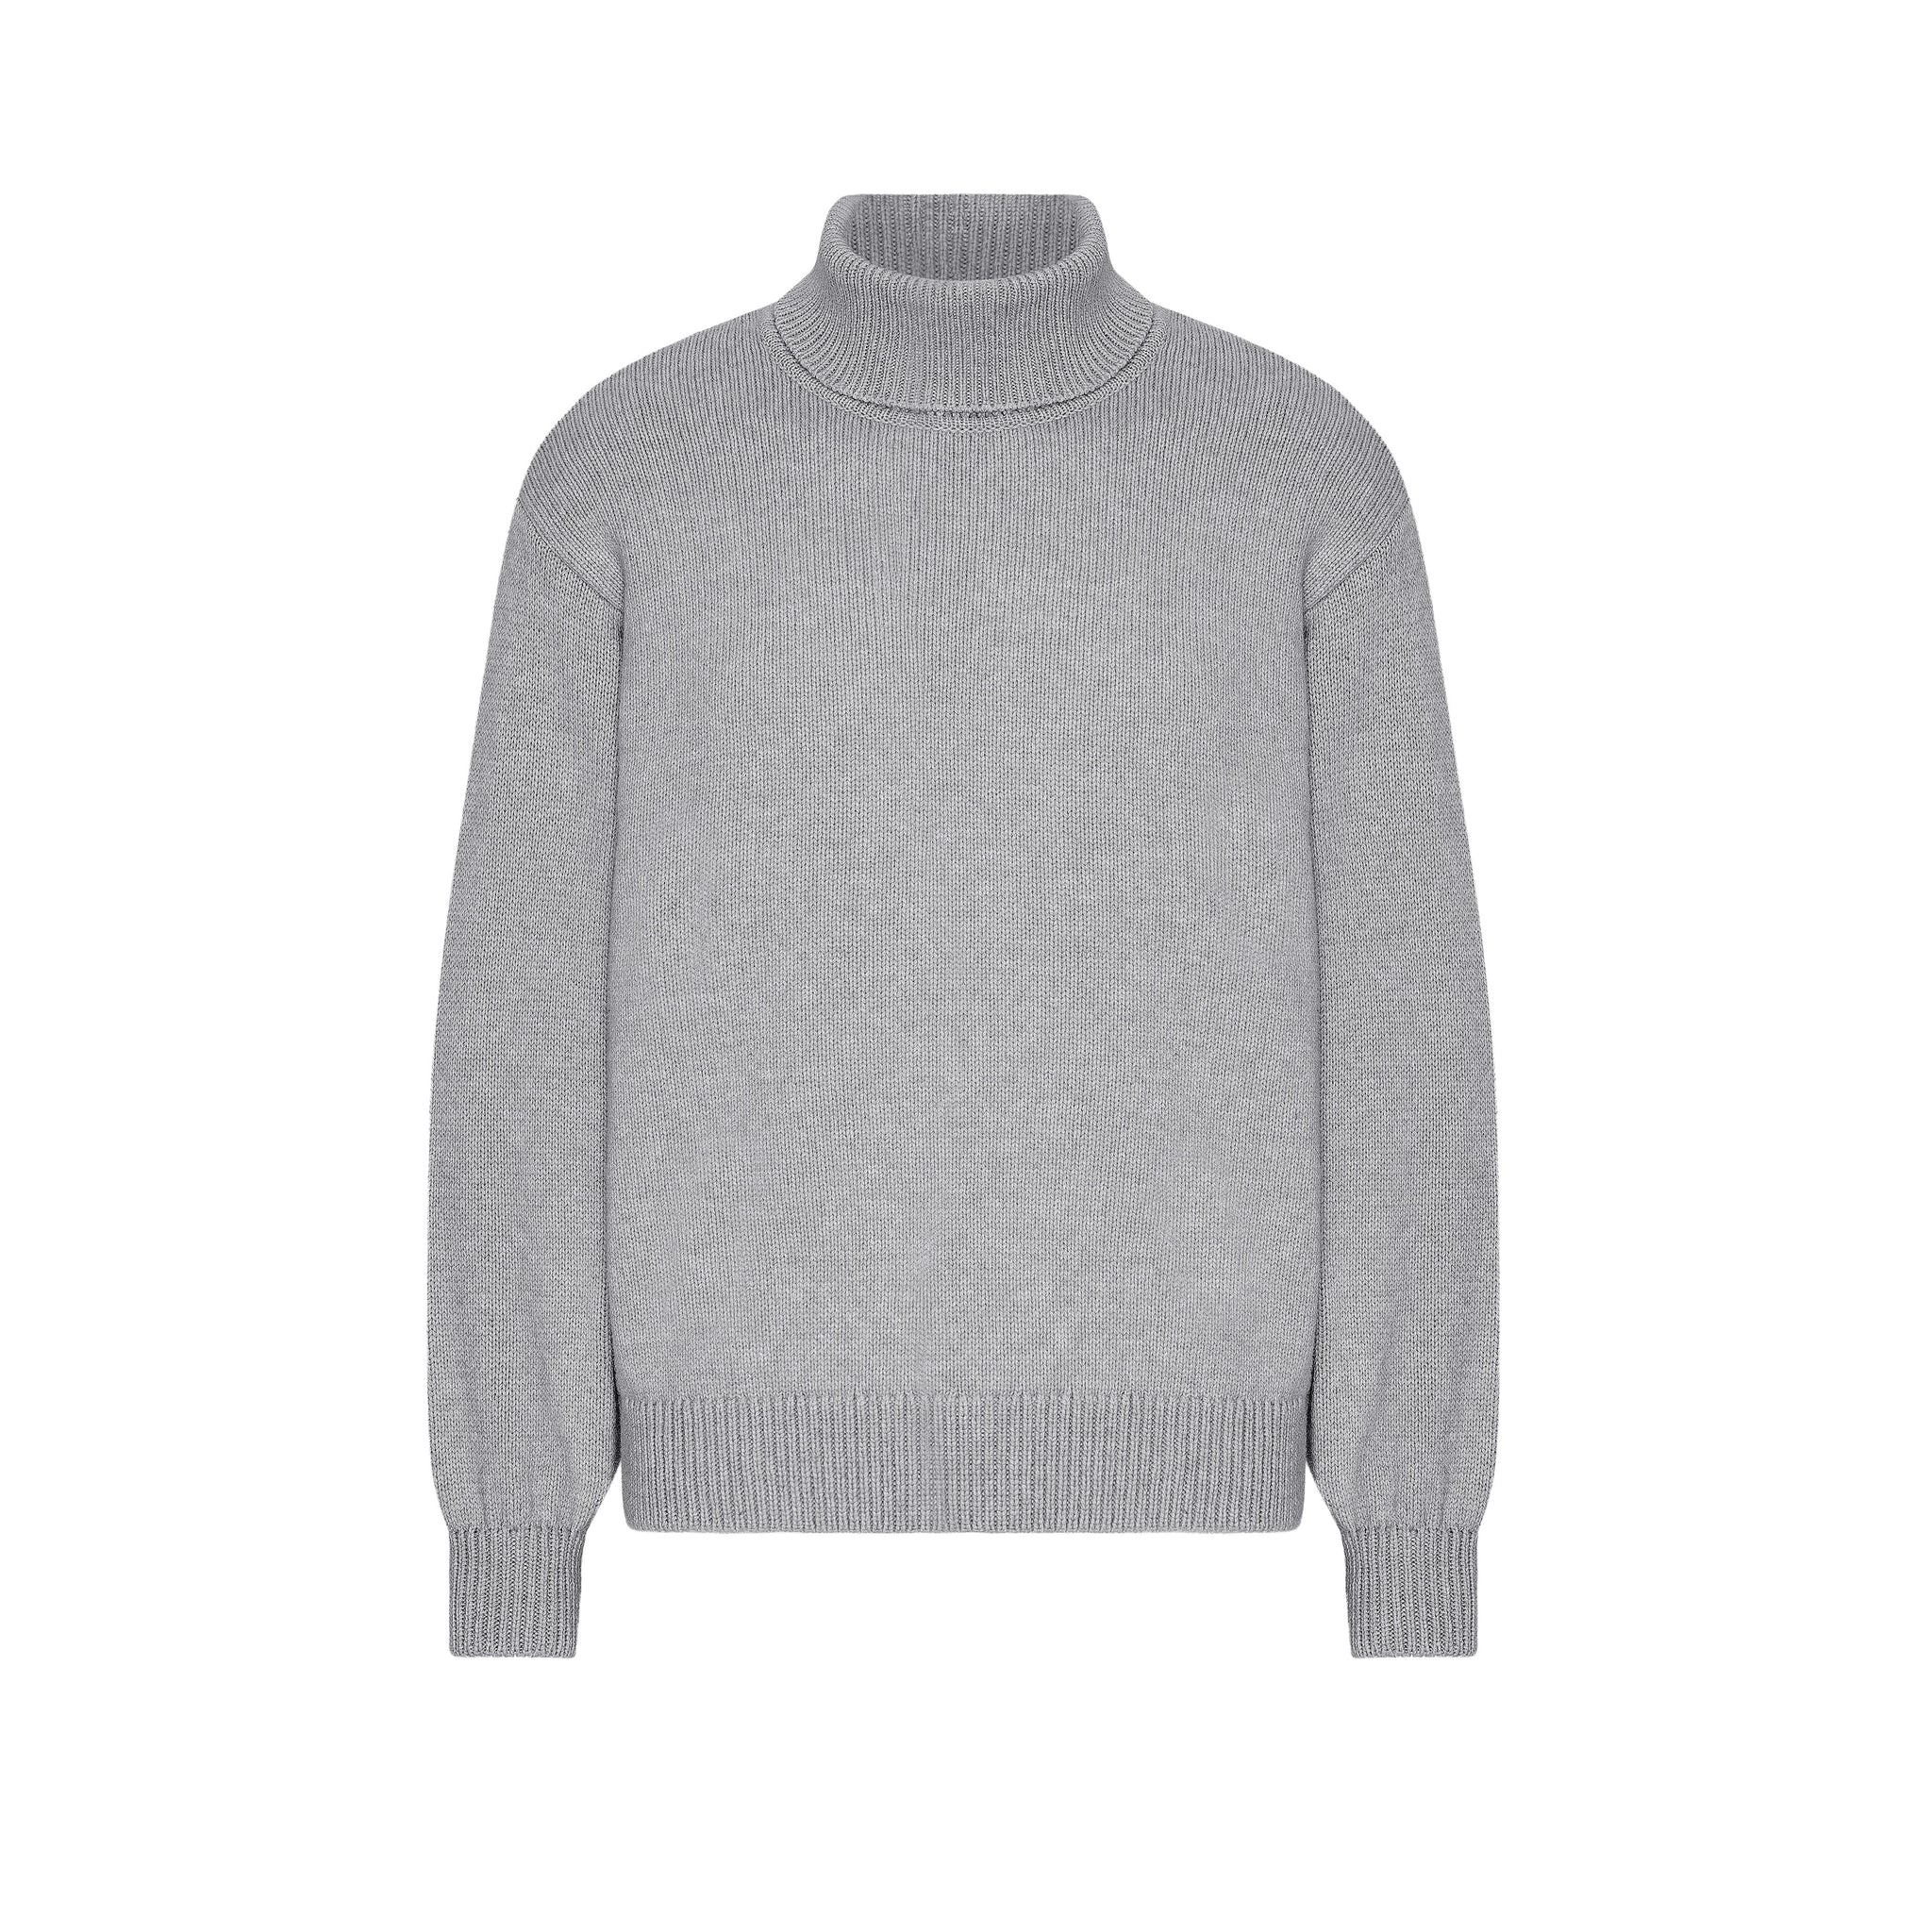 Merino Wool Turtleneck in heather grey